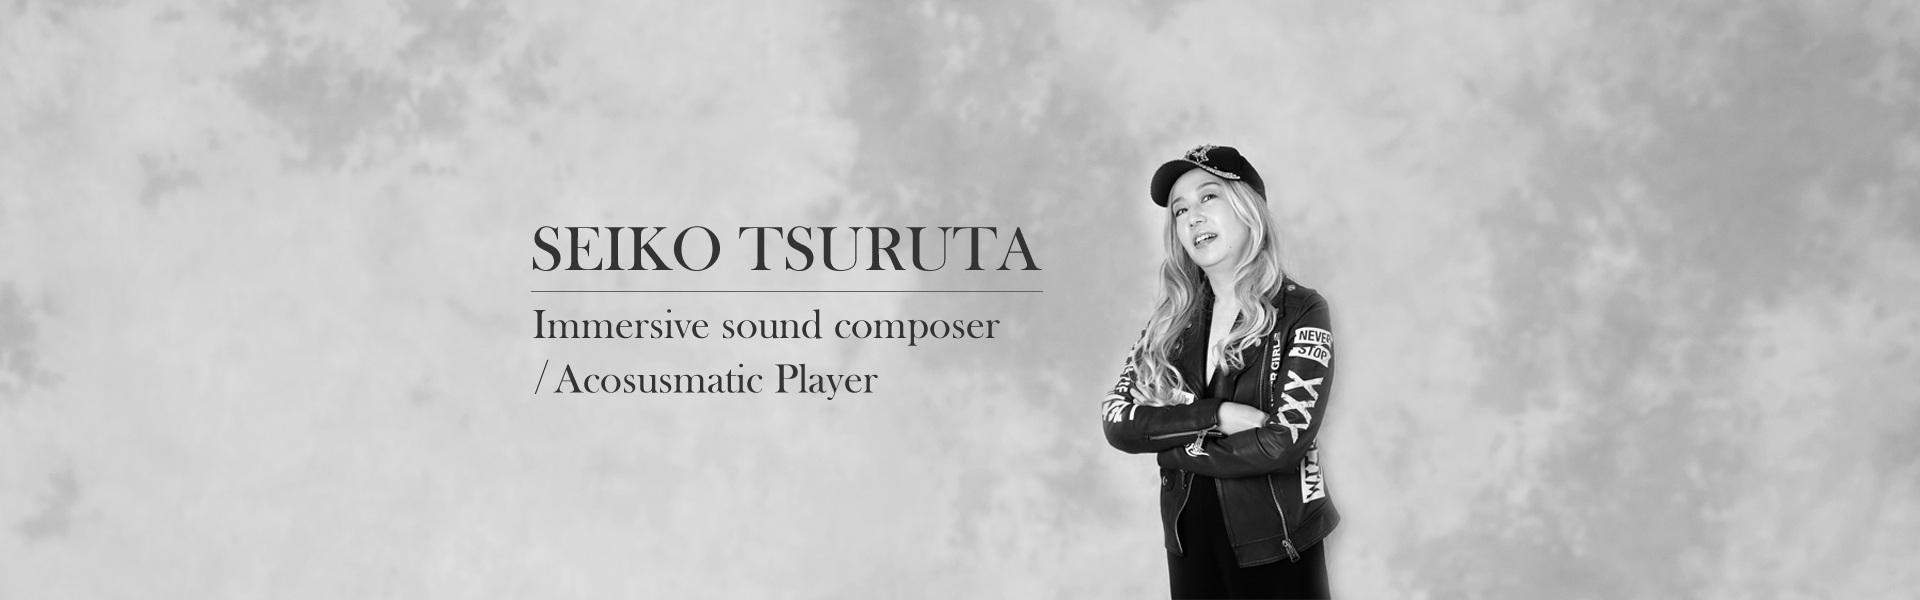 SEIKO TSURUTA Immersive sound composer Acousmatic Player